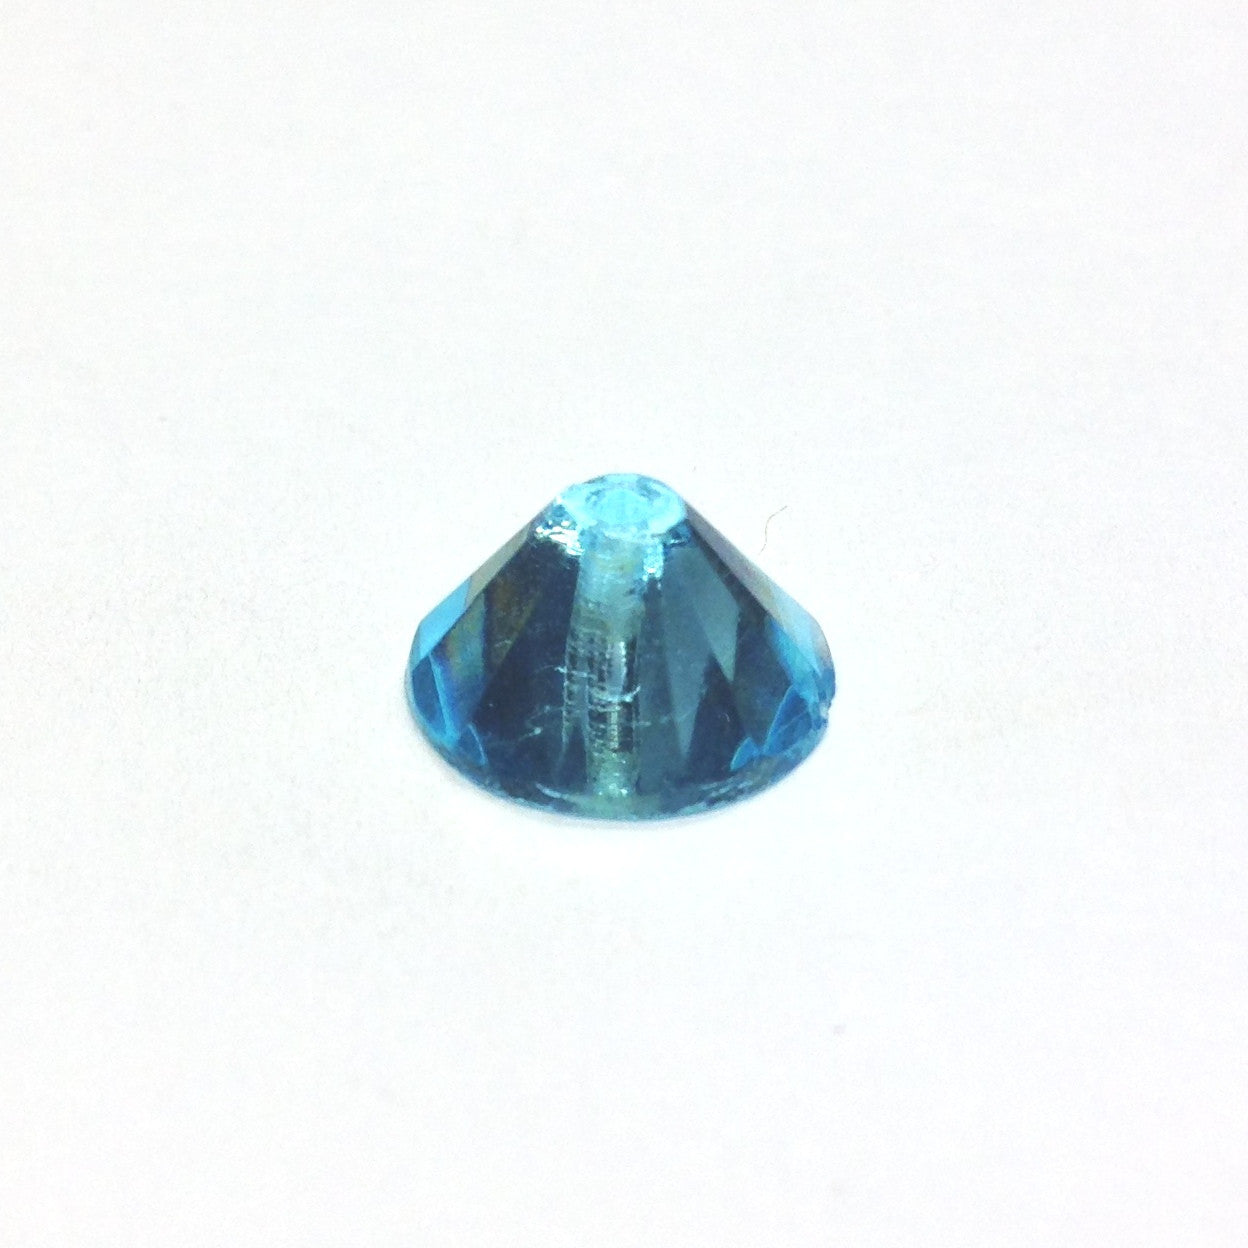 6MM Aqua Faceted Glass Pyramid Bead (144 pieces)